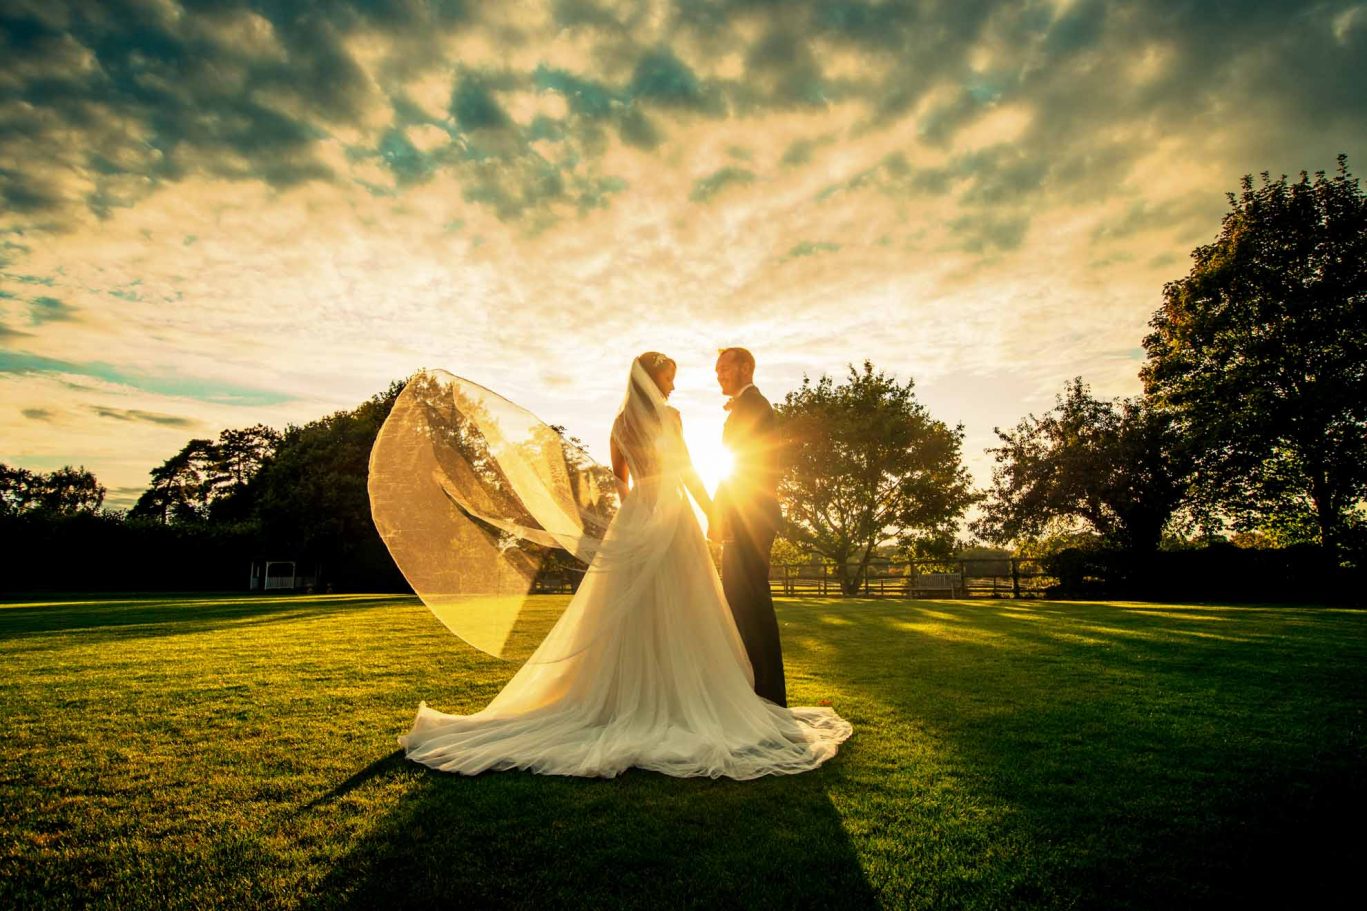 Wedding couple outdoor setting sun in essex